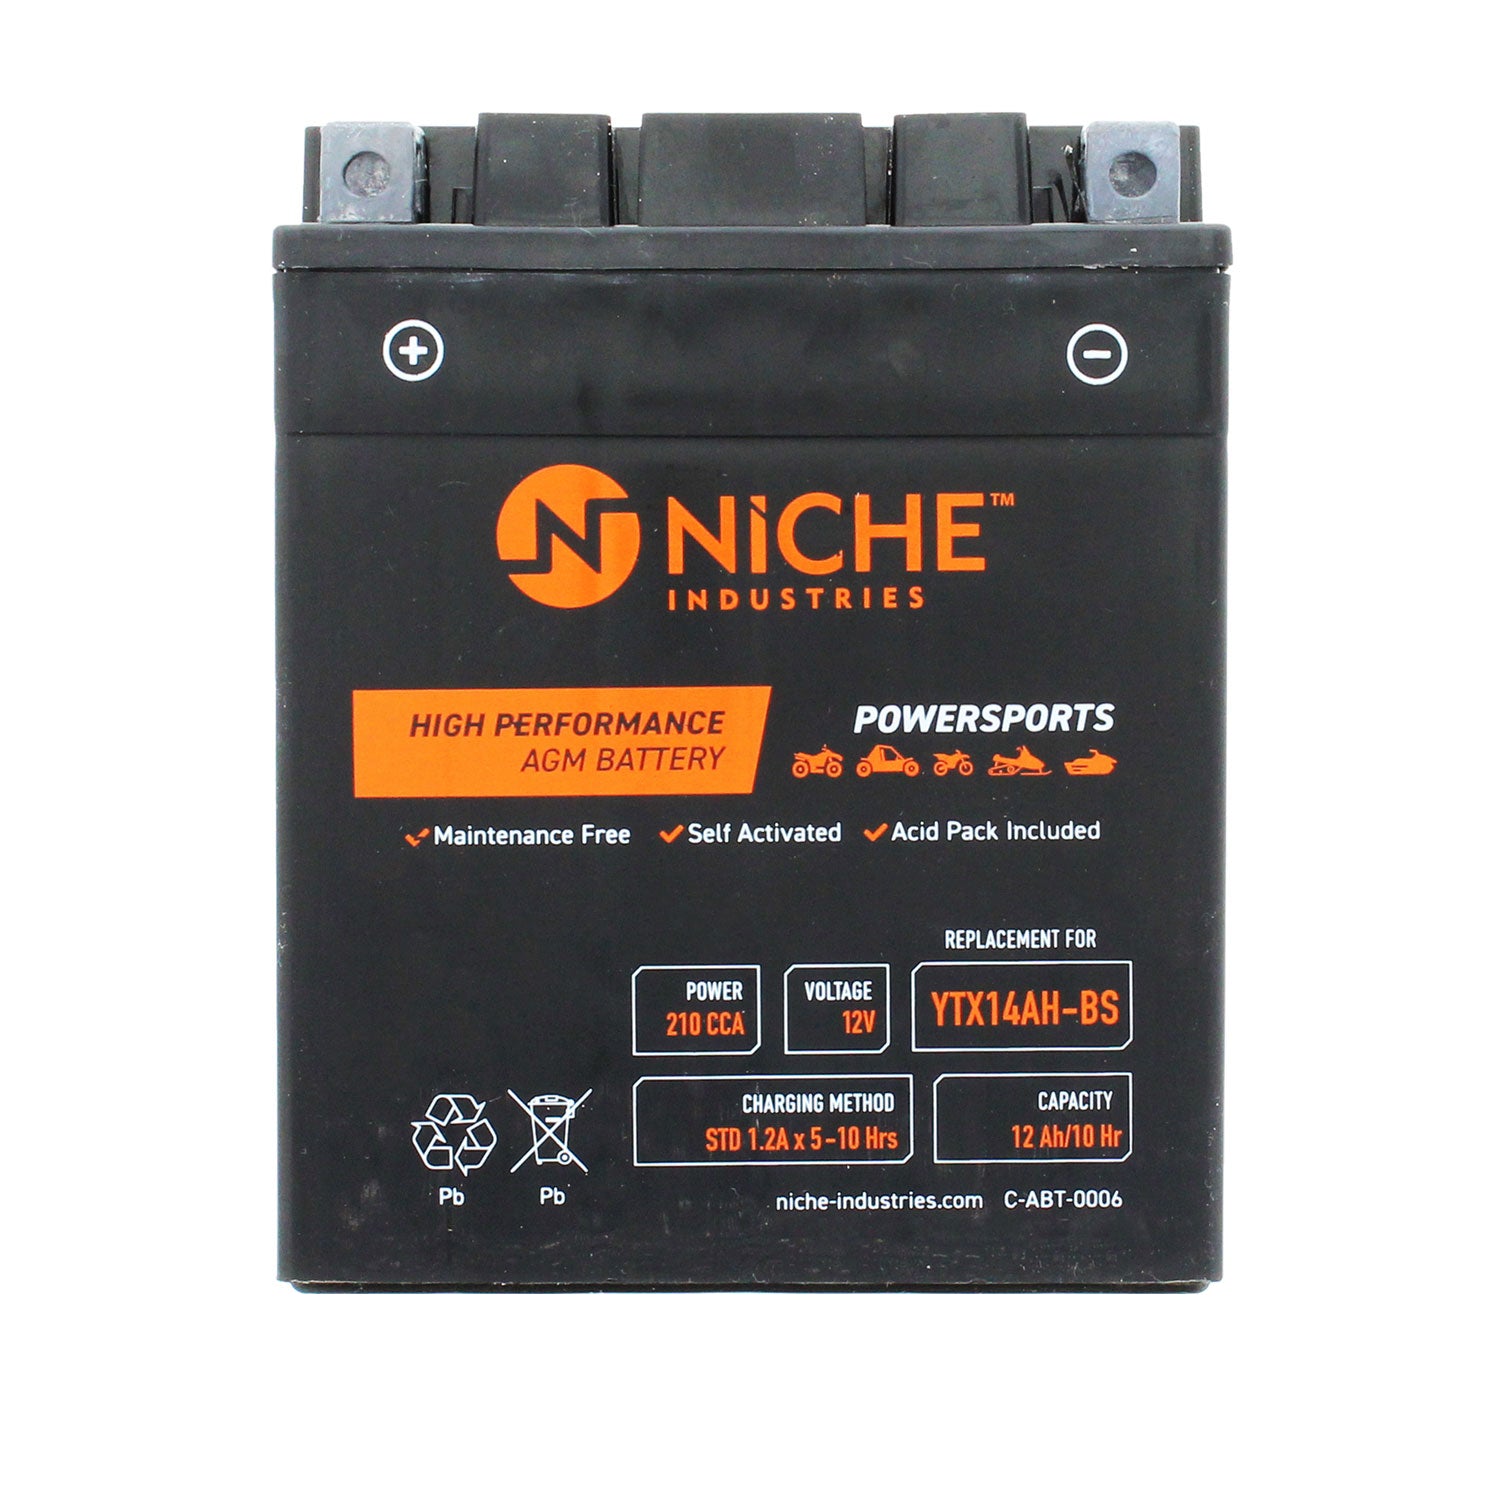 NICHE AGM Battery 3323-206 31500-MW3-721 26012-1271